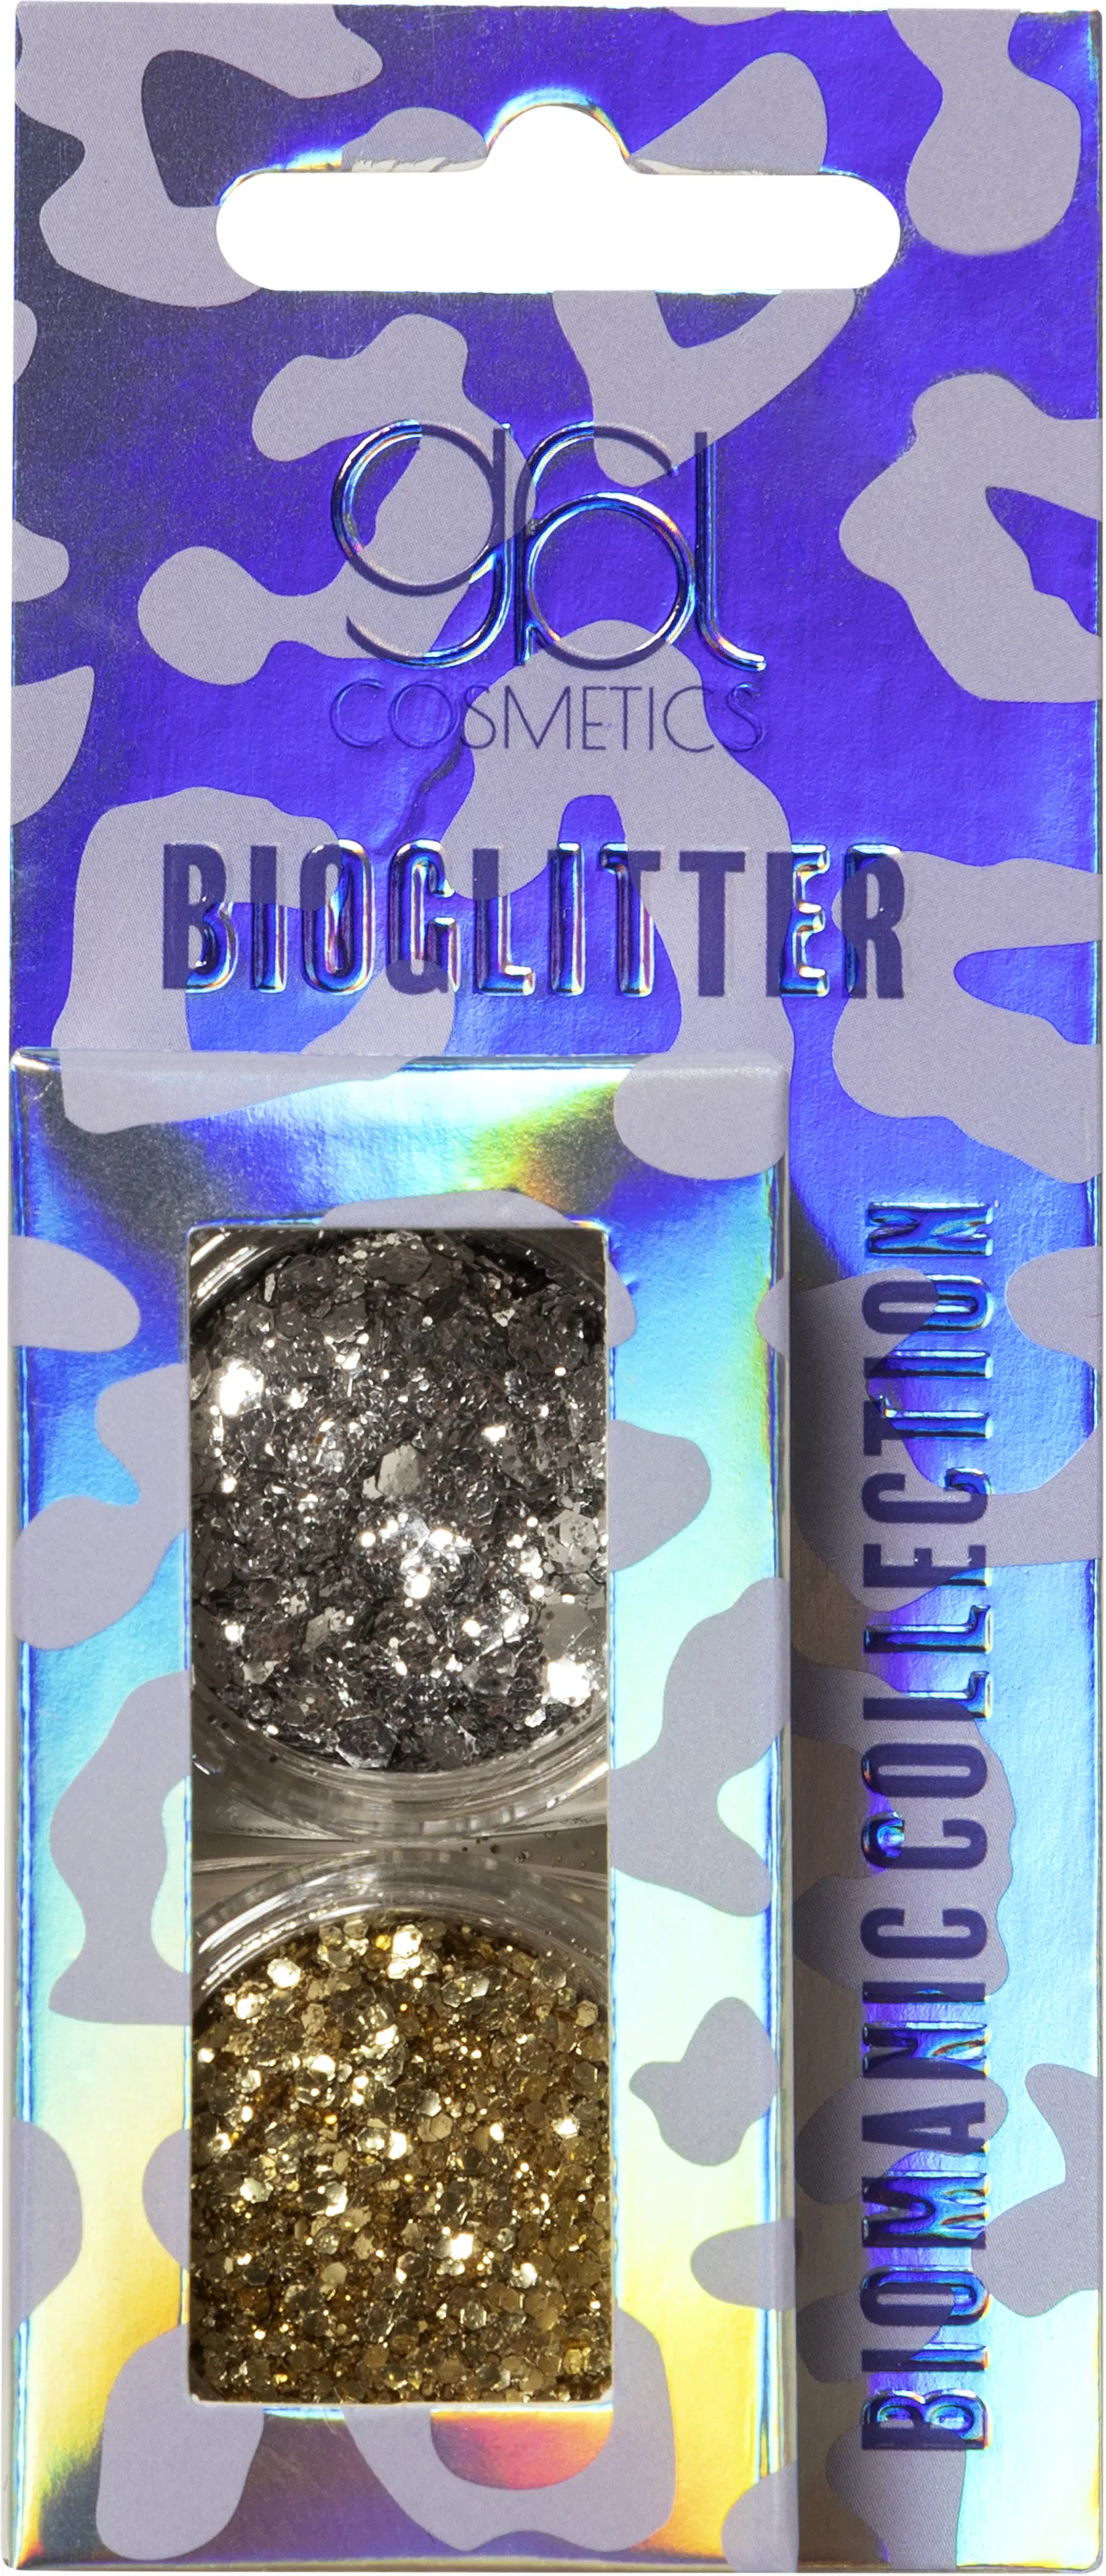 GBL Cosmetics Biomanic bioglitter royale